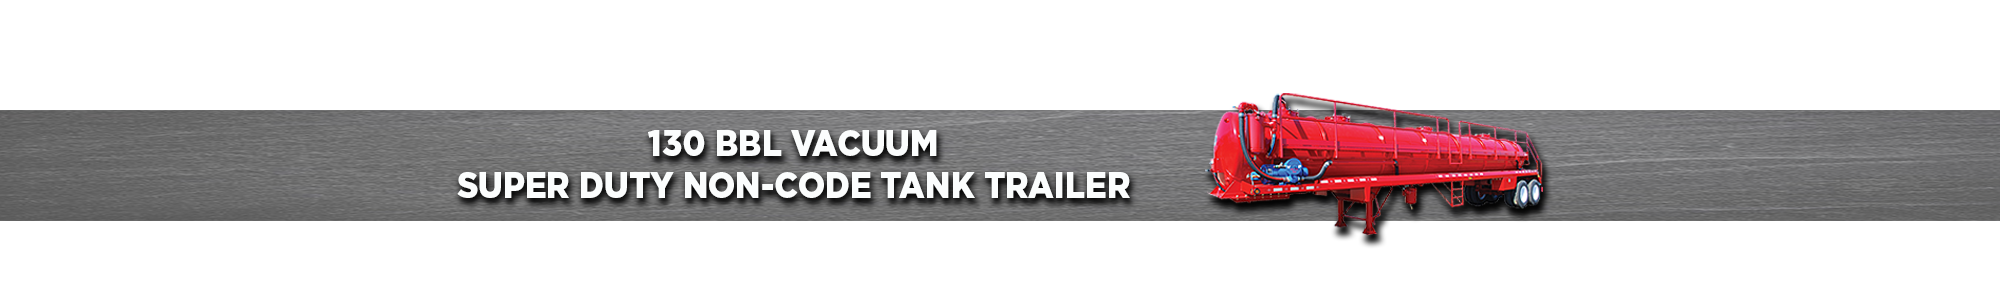 130 BBL Non-Code Vacuum Tank Trailer